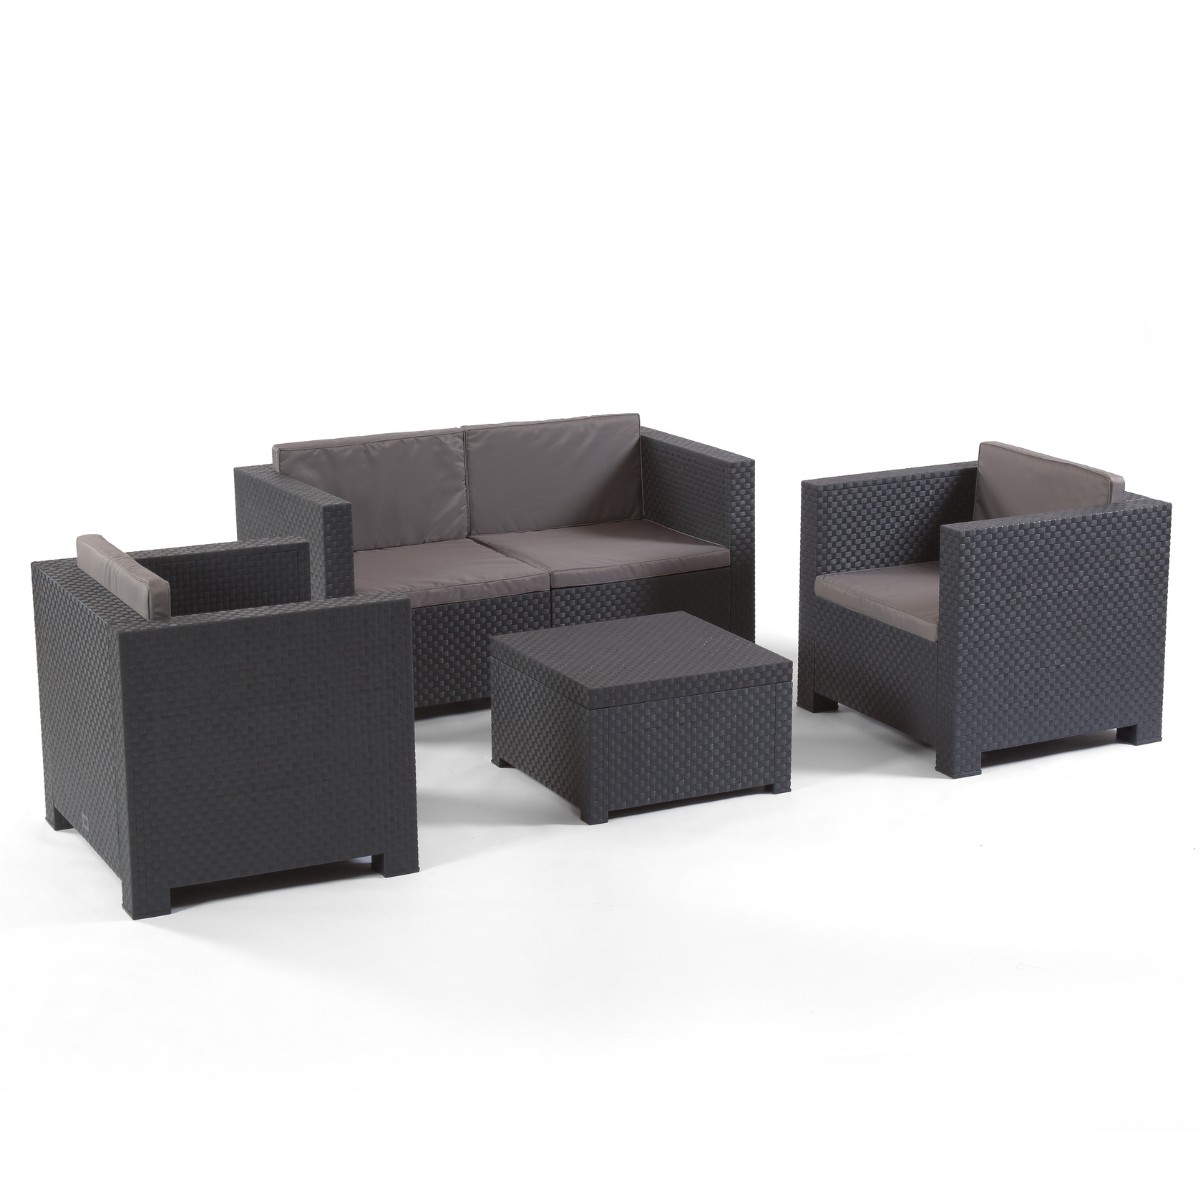 Dalkey Outdoor Sofa Set with Storage - 1